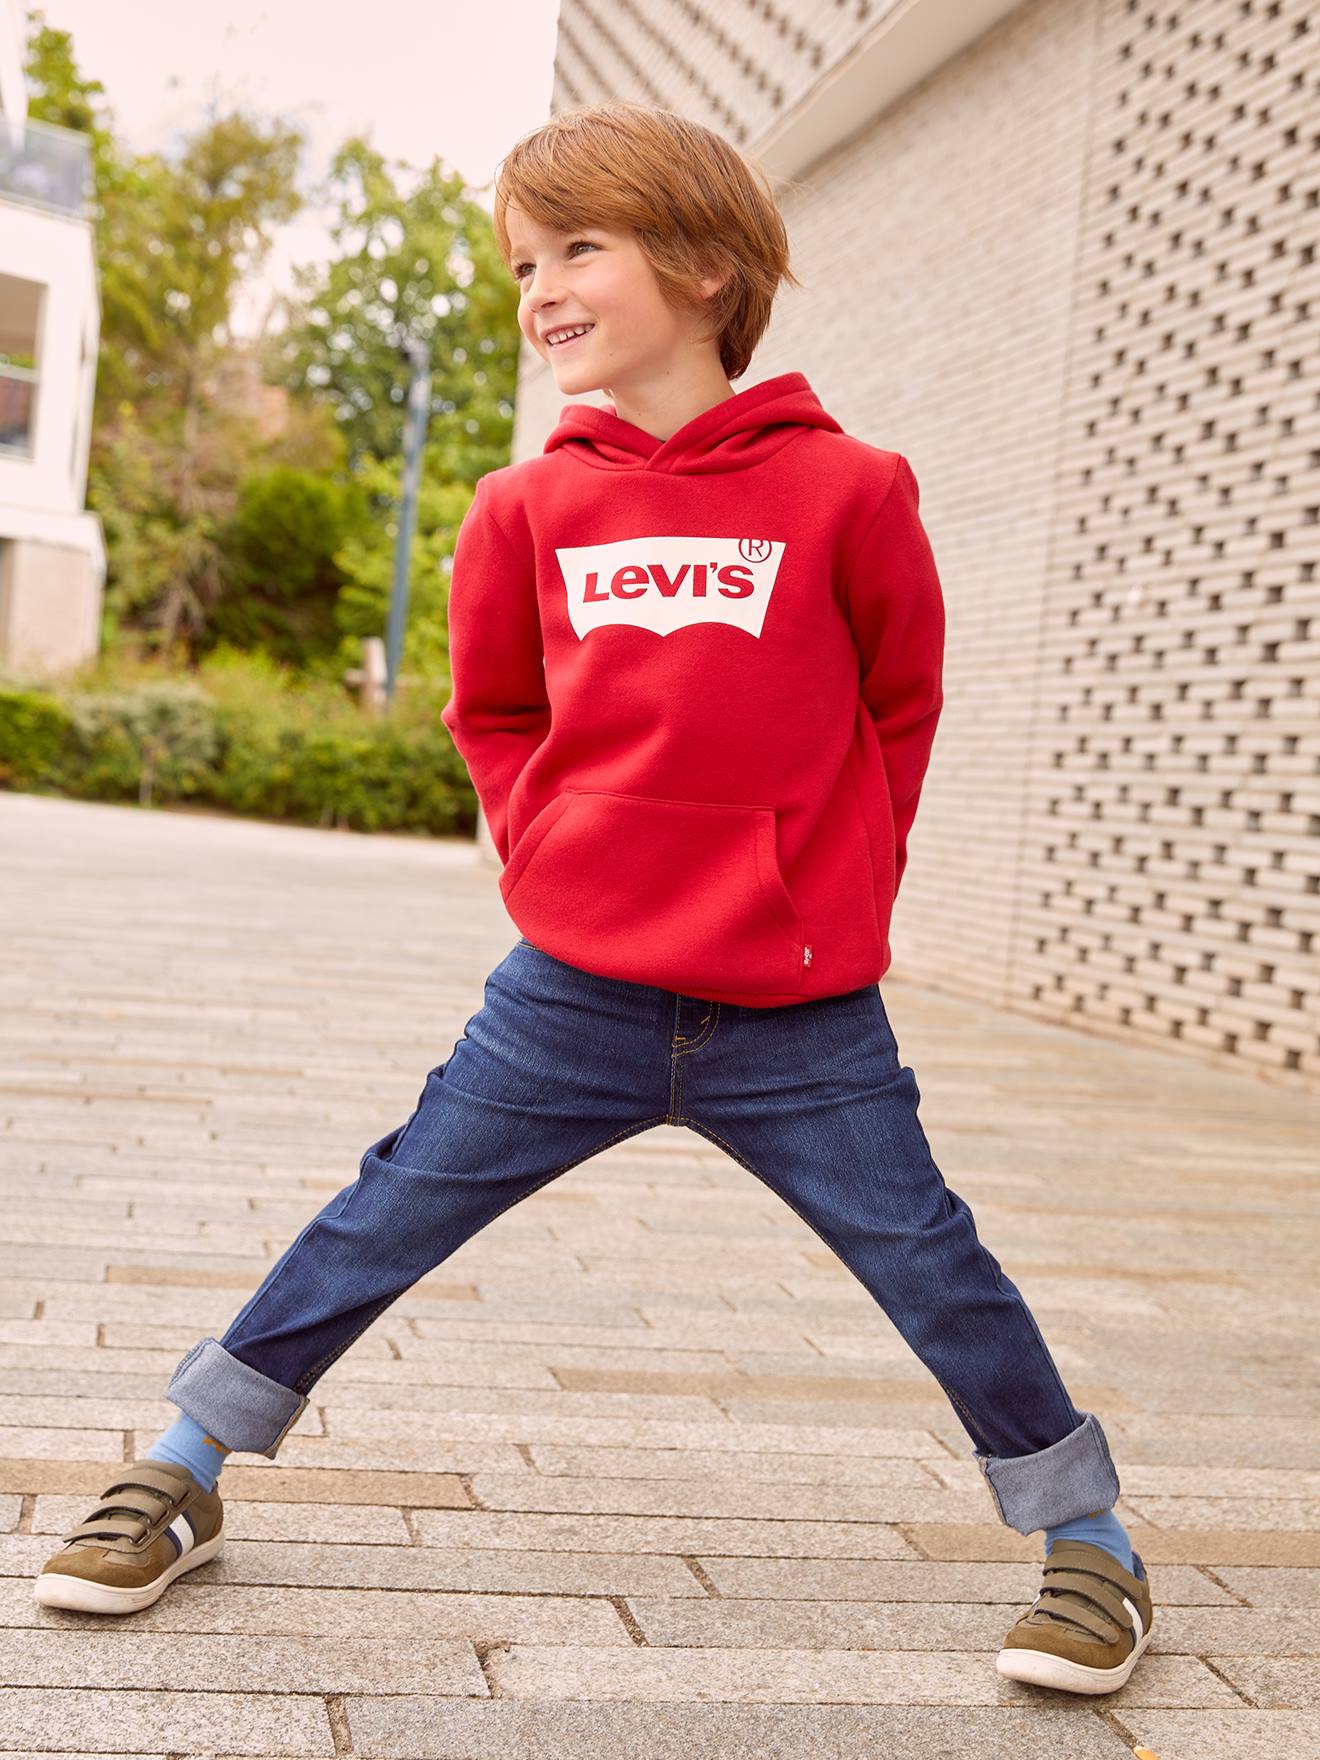 Levi's: The Original Casual Jeans Brand - 80's Casual Classics